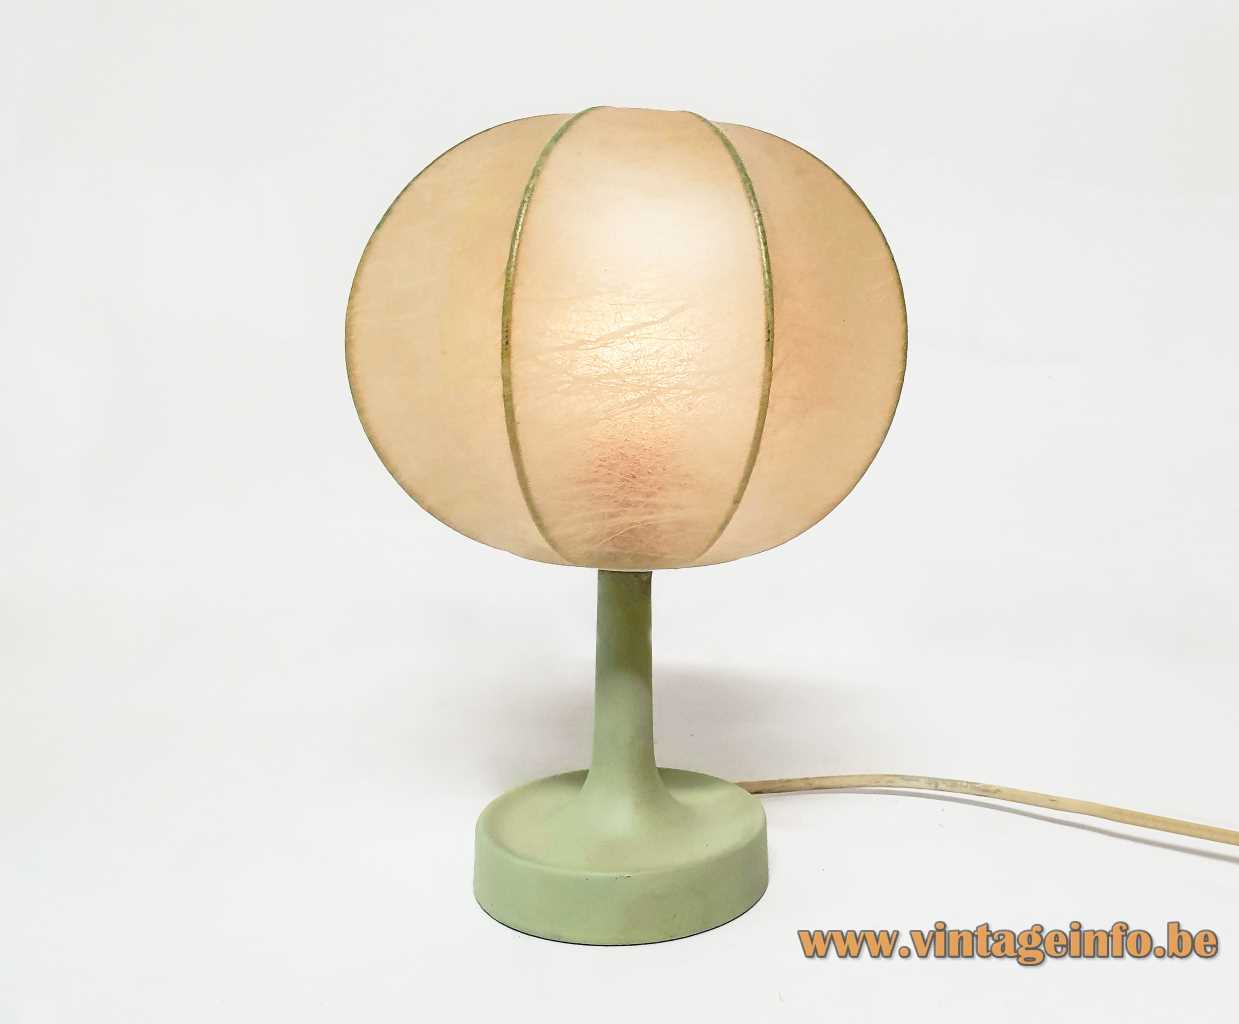 Goldkant Leuchten Garbo table lamp Cocoon plastic globe lampshade FLOS Achille Castiglioni 1960s 1970s Germany